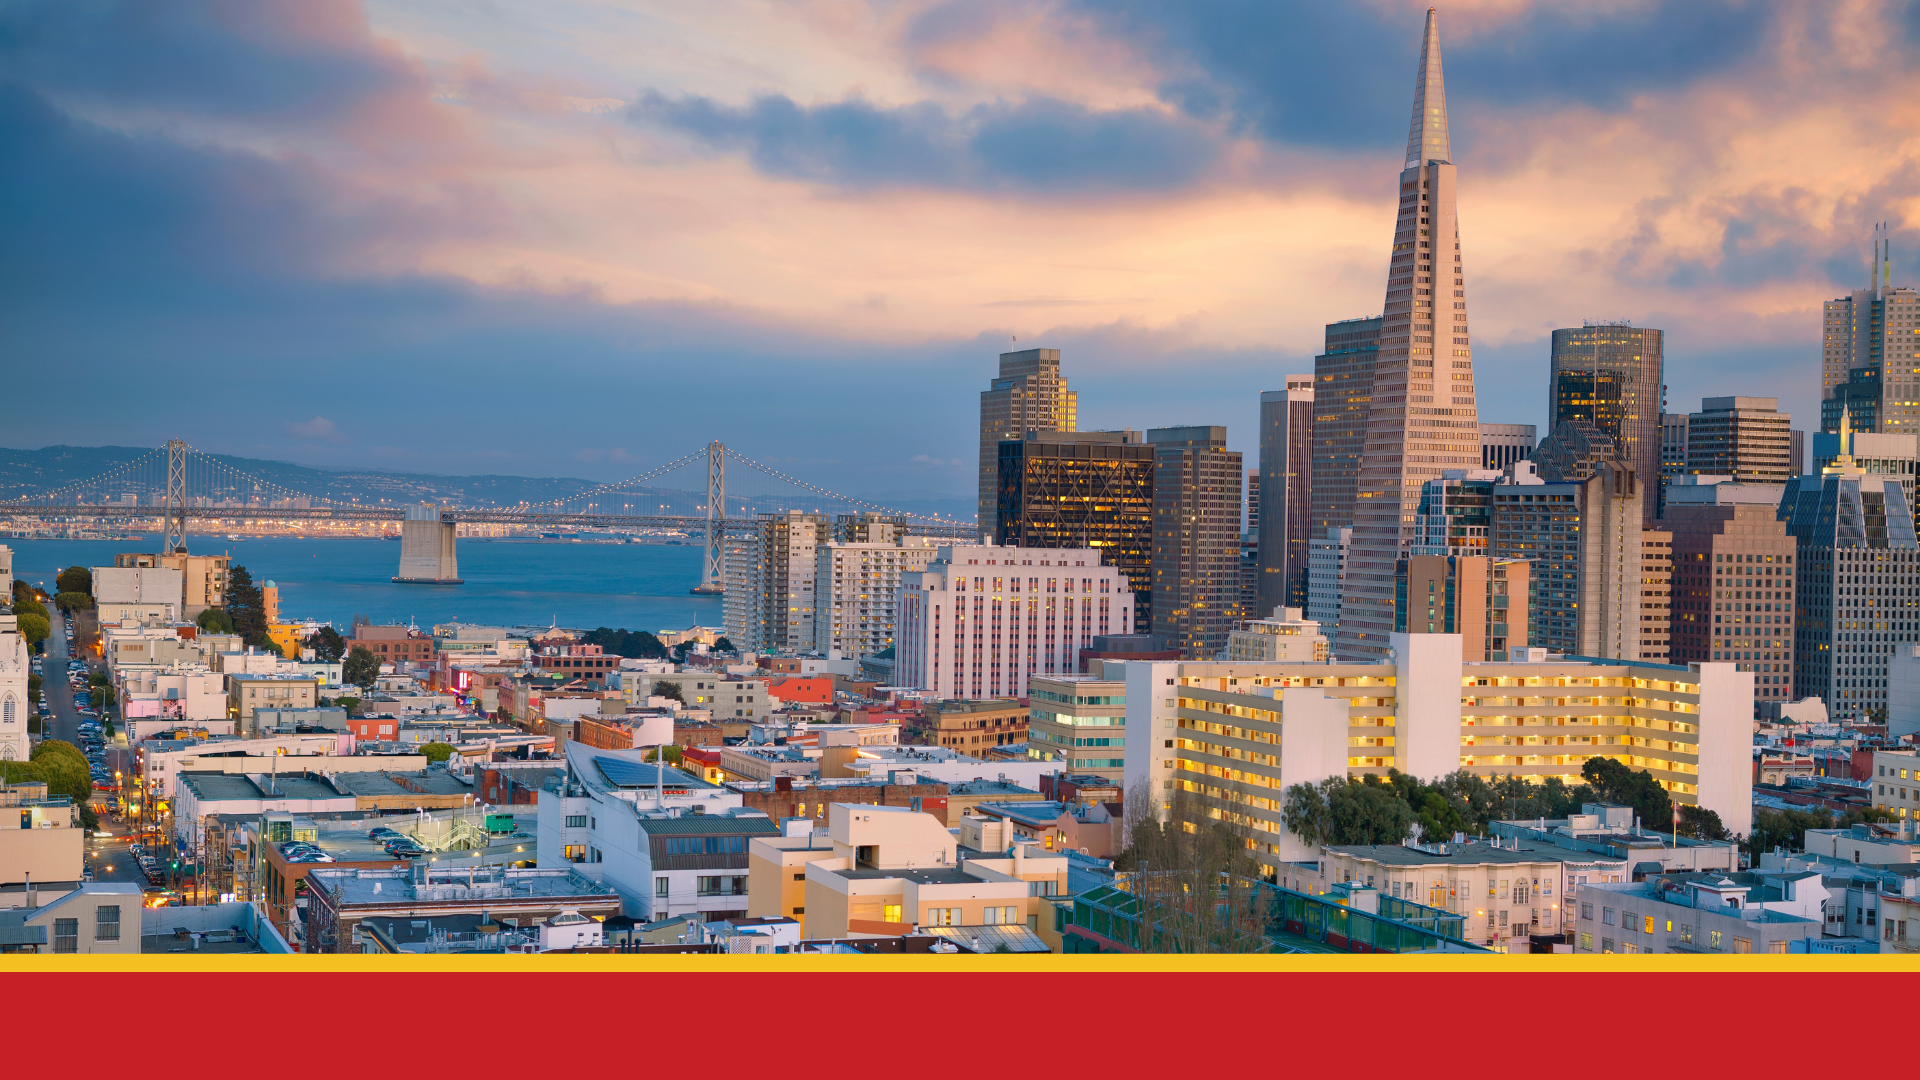 City of San Francisco skyline